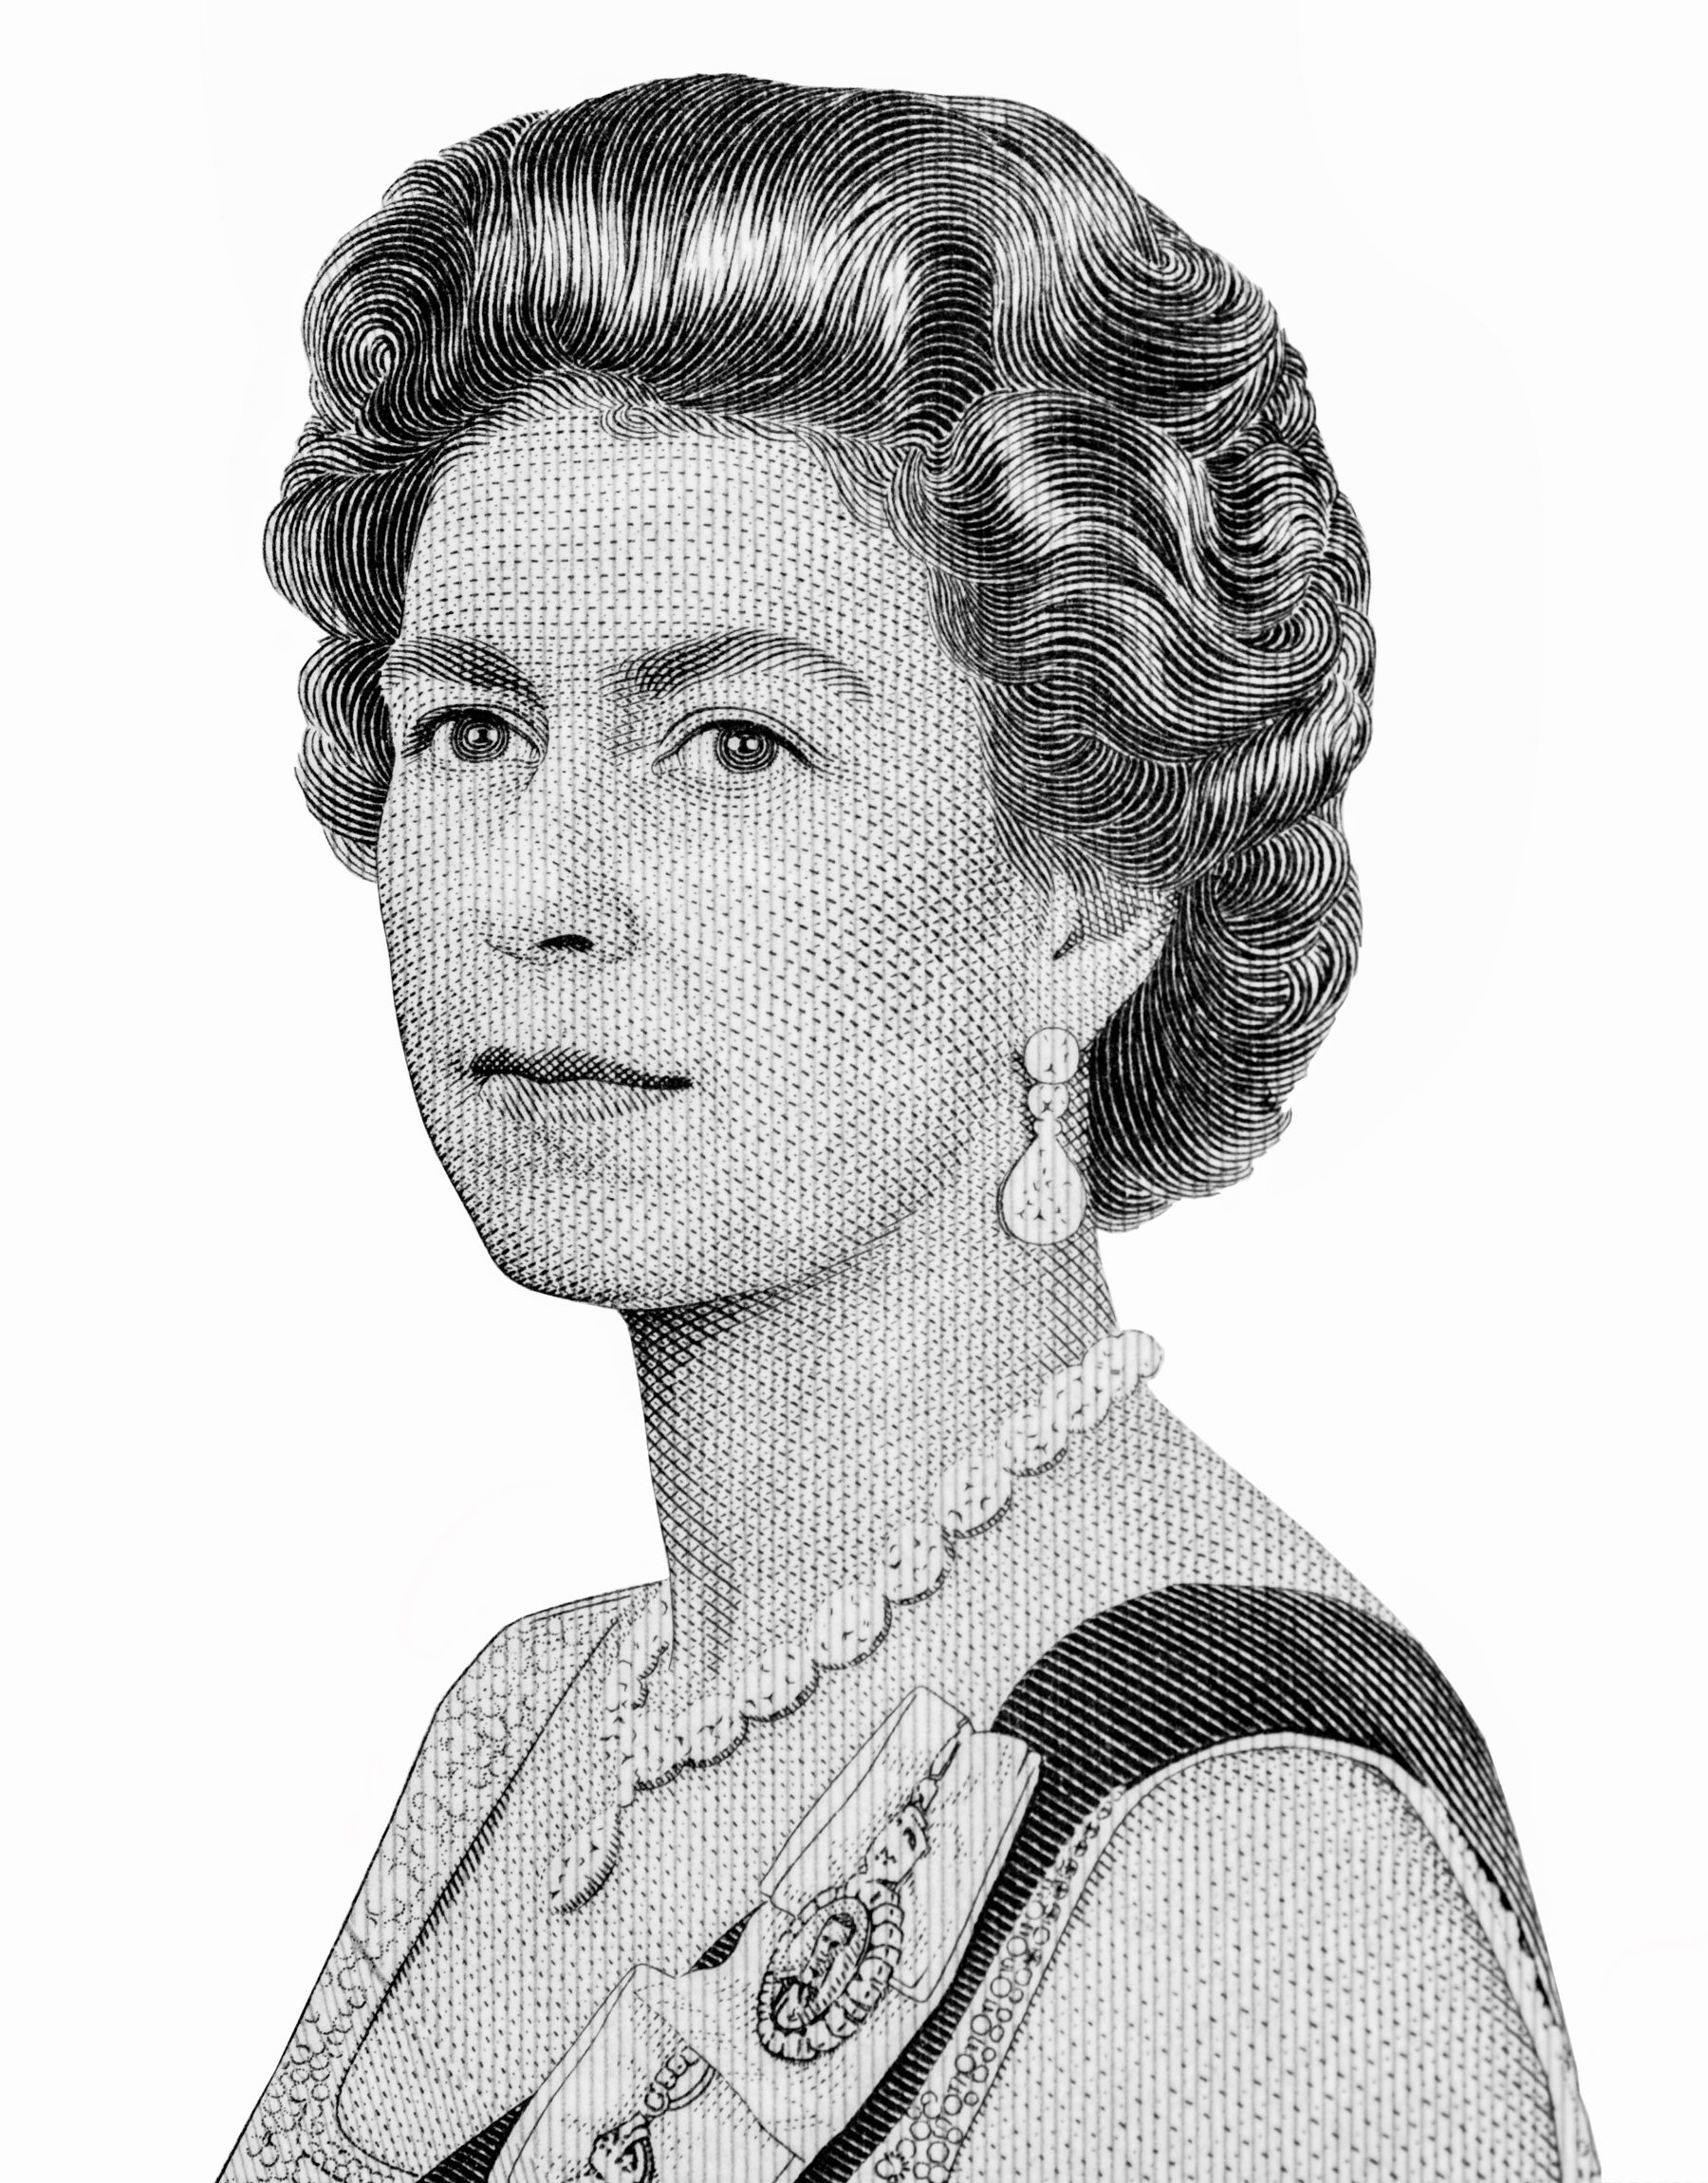 Queen Elizabeth II And Her Maritime Connection